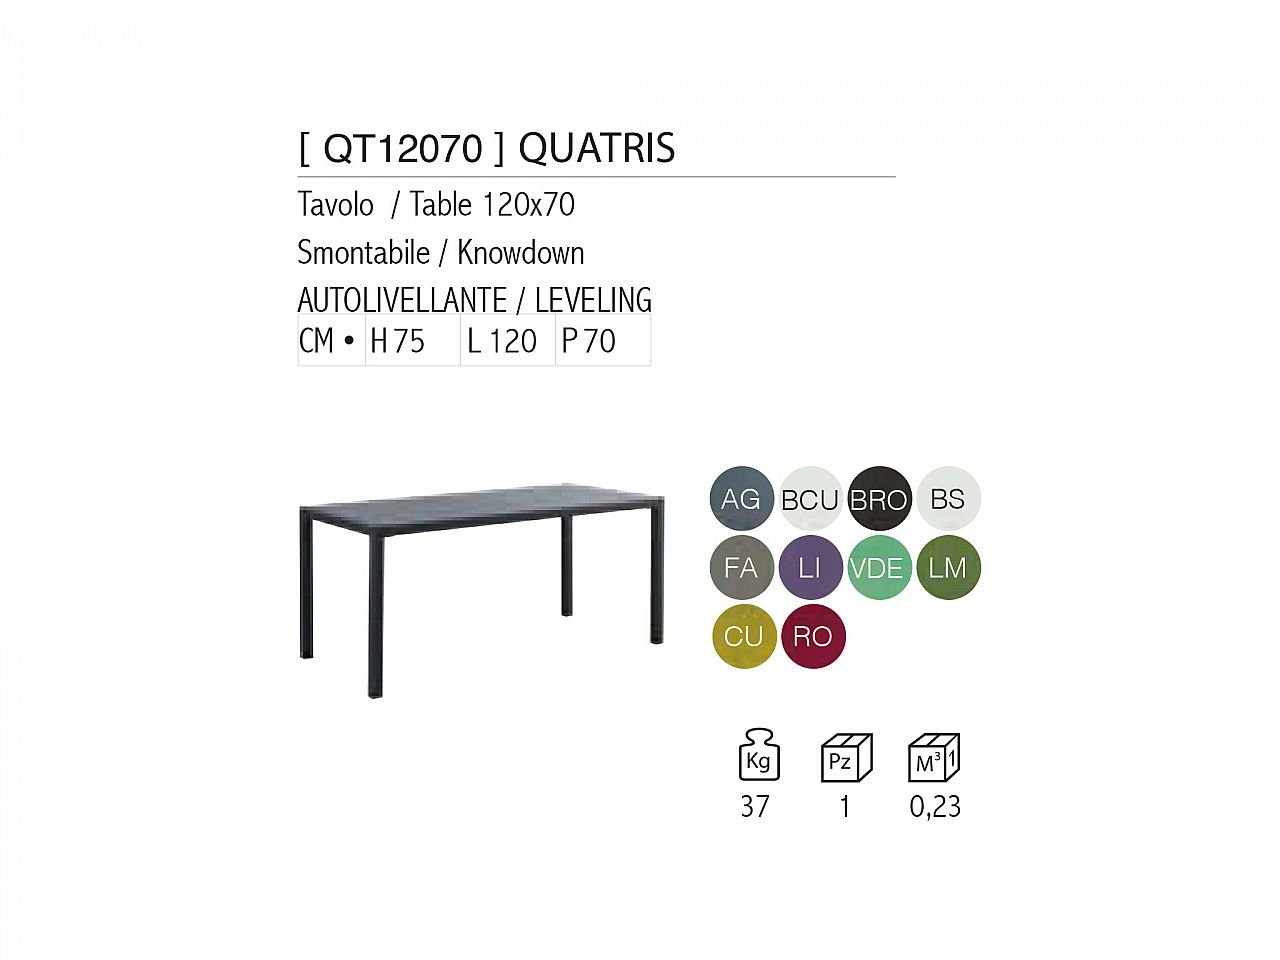 Tavolo Quatris 120x70 - 1